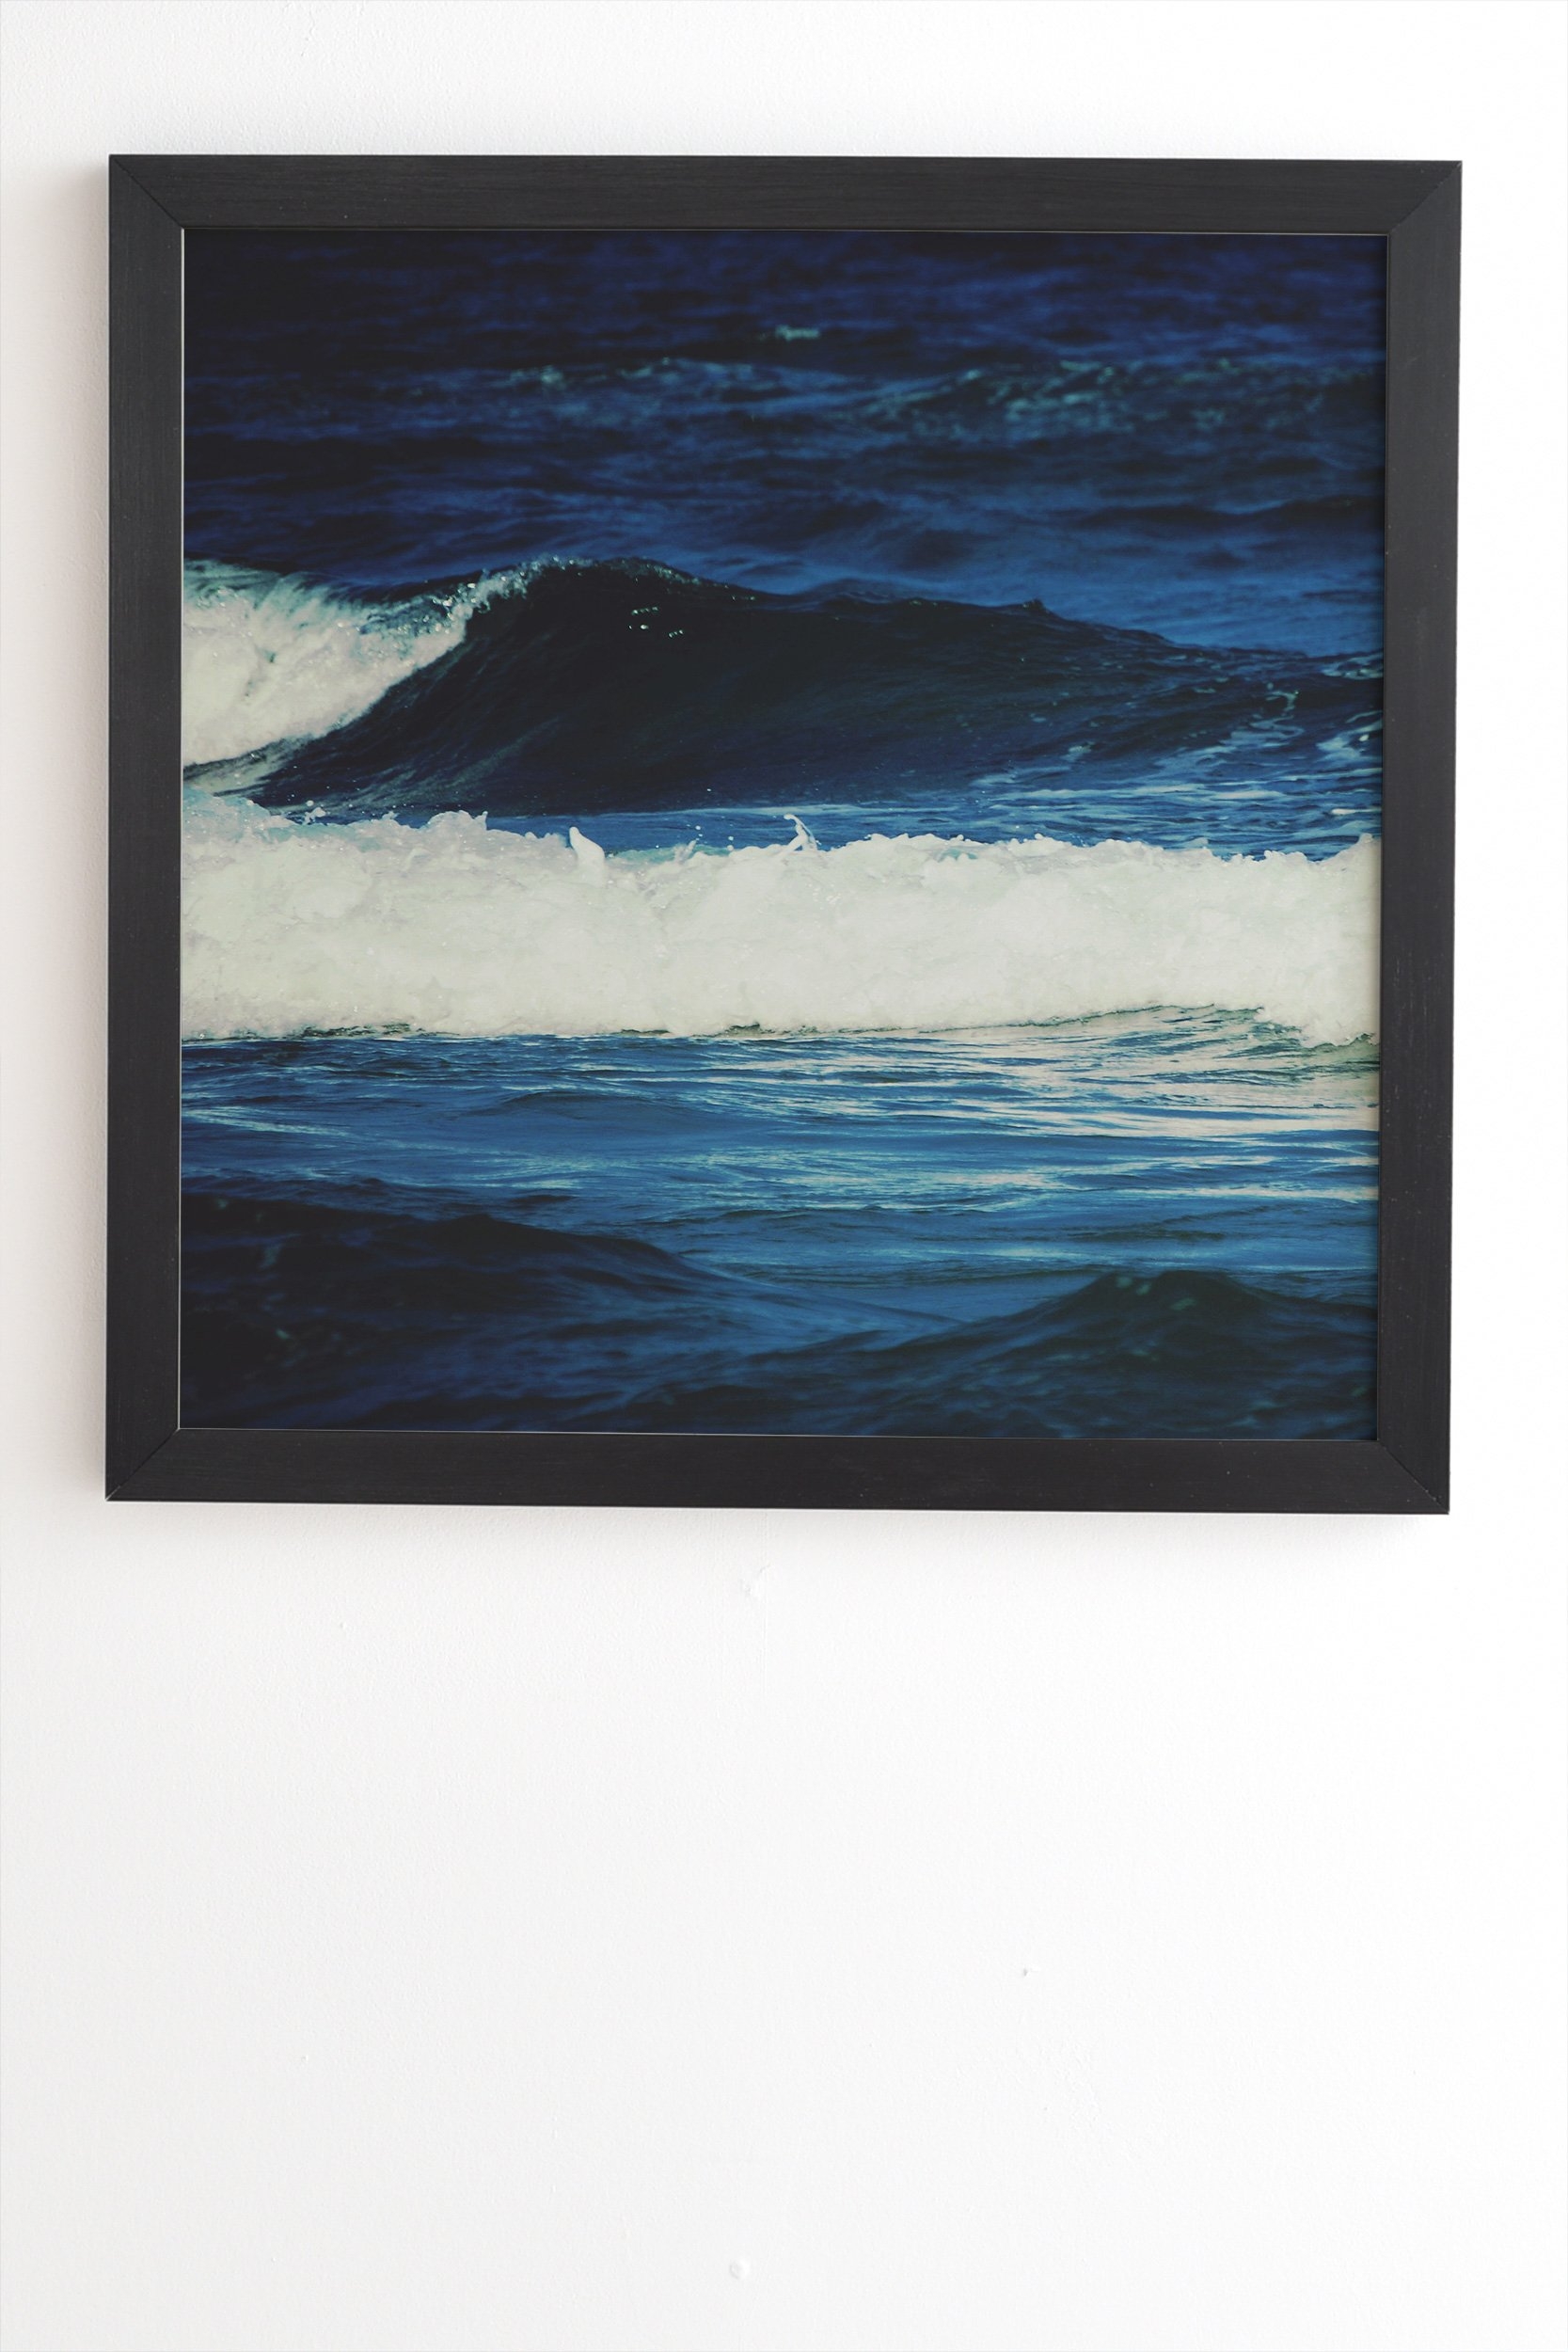 Chelsea Victoria Ocean Waves Black Framed Wall Art - 30" x 30" - Image 1